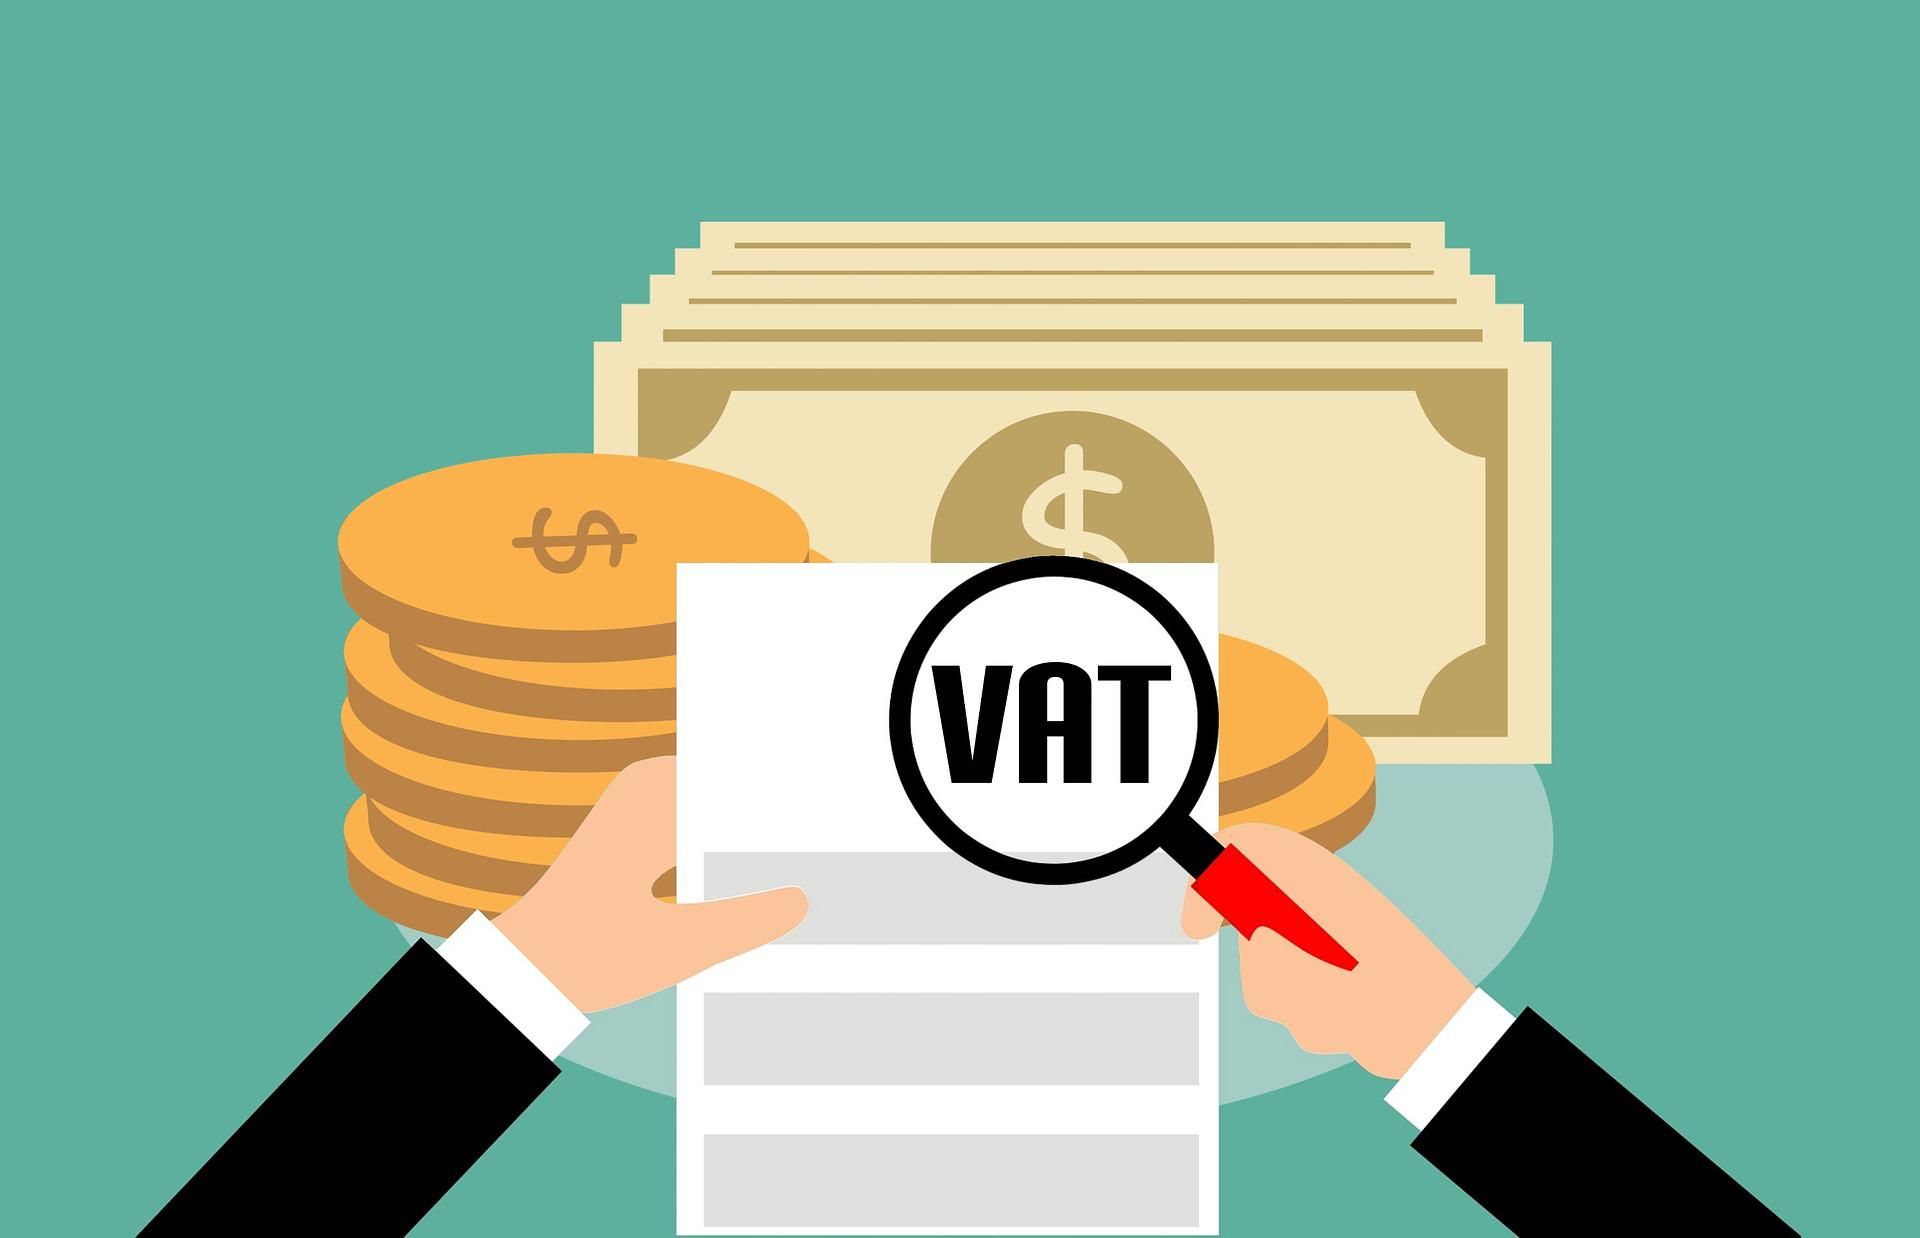 Making TAX Digital for VAT